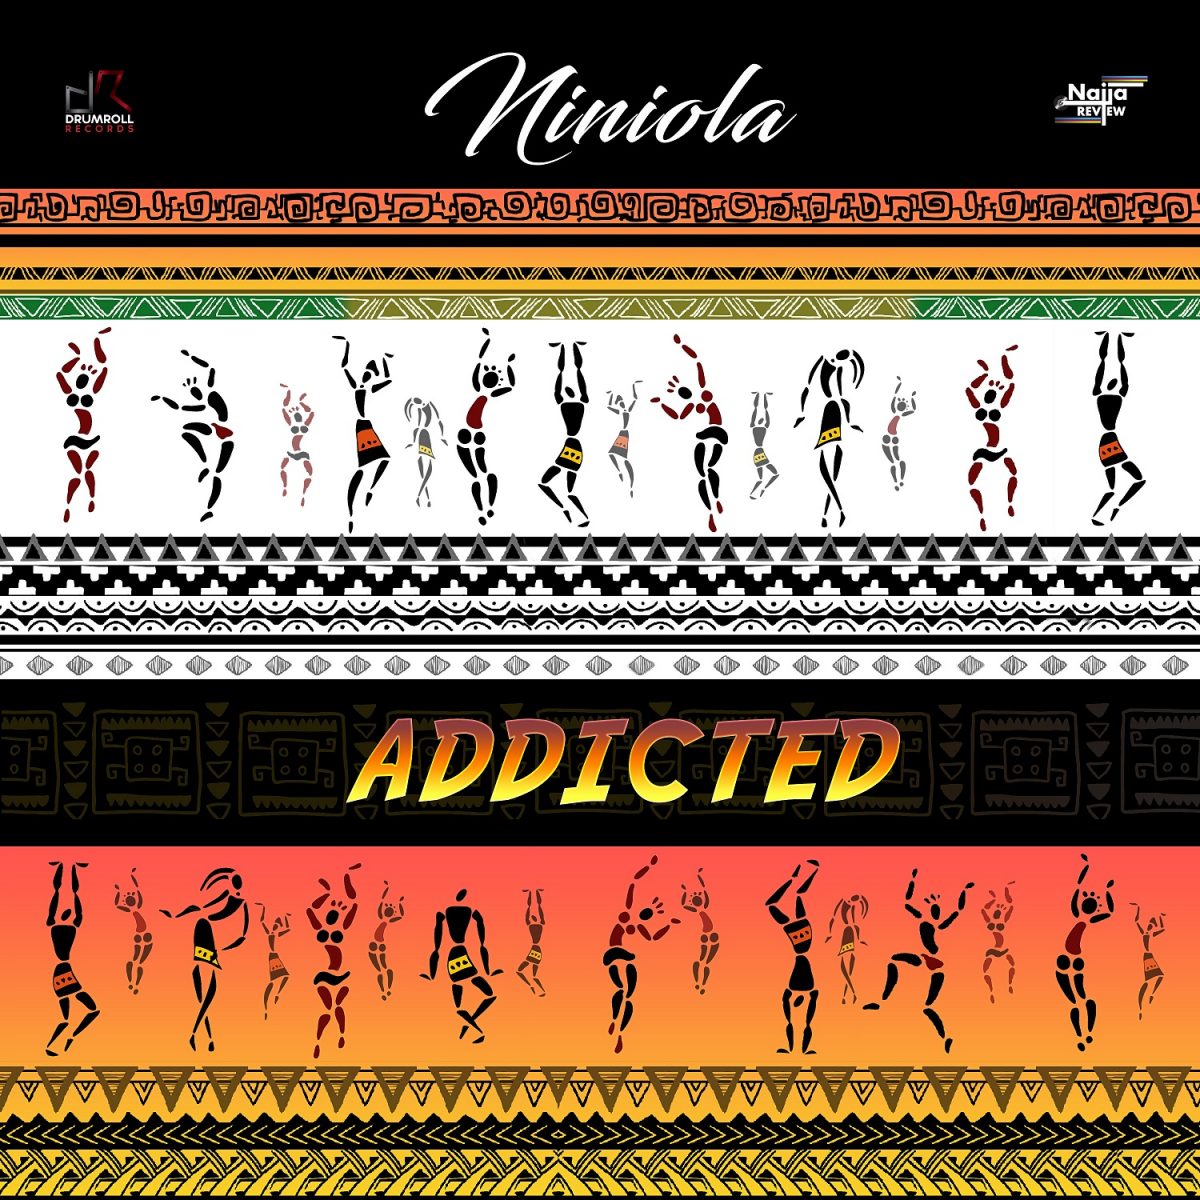 Niniola - Addicted (Lyric Video)